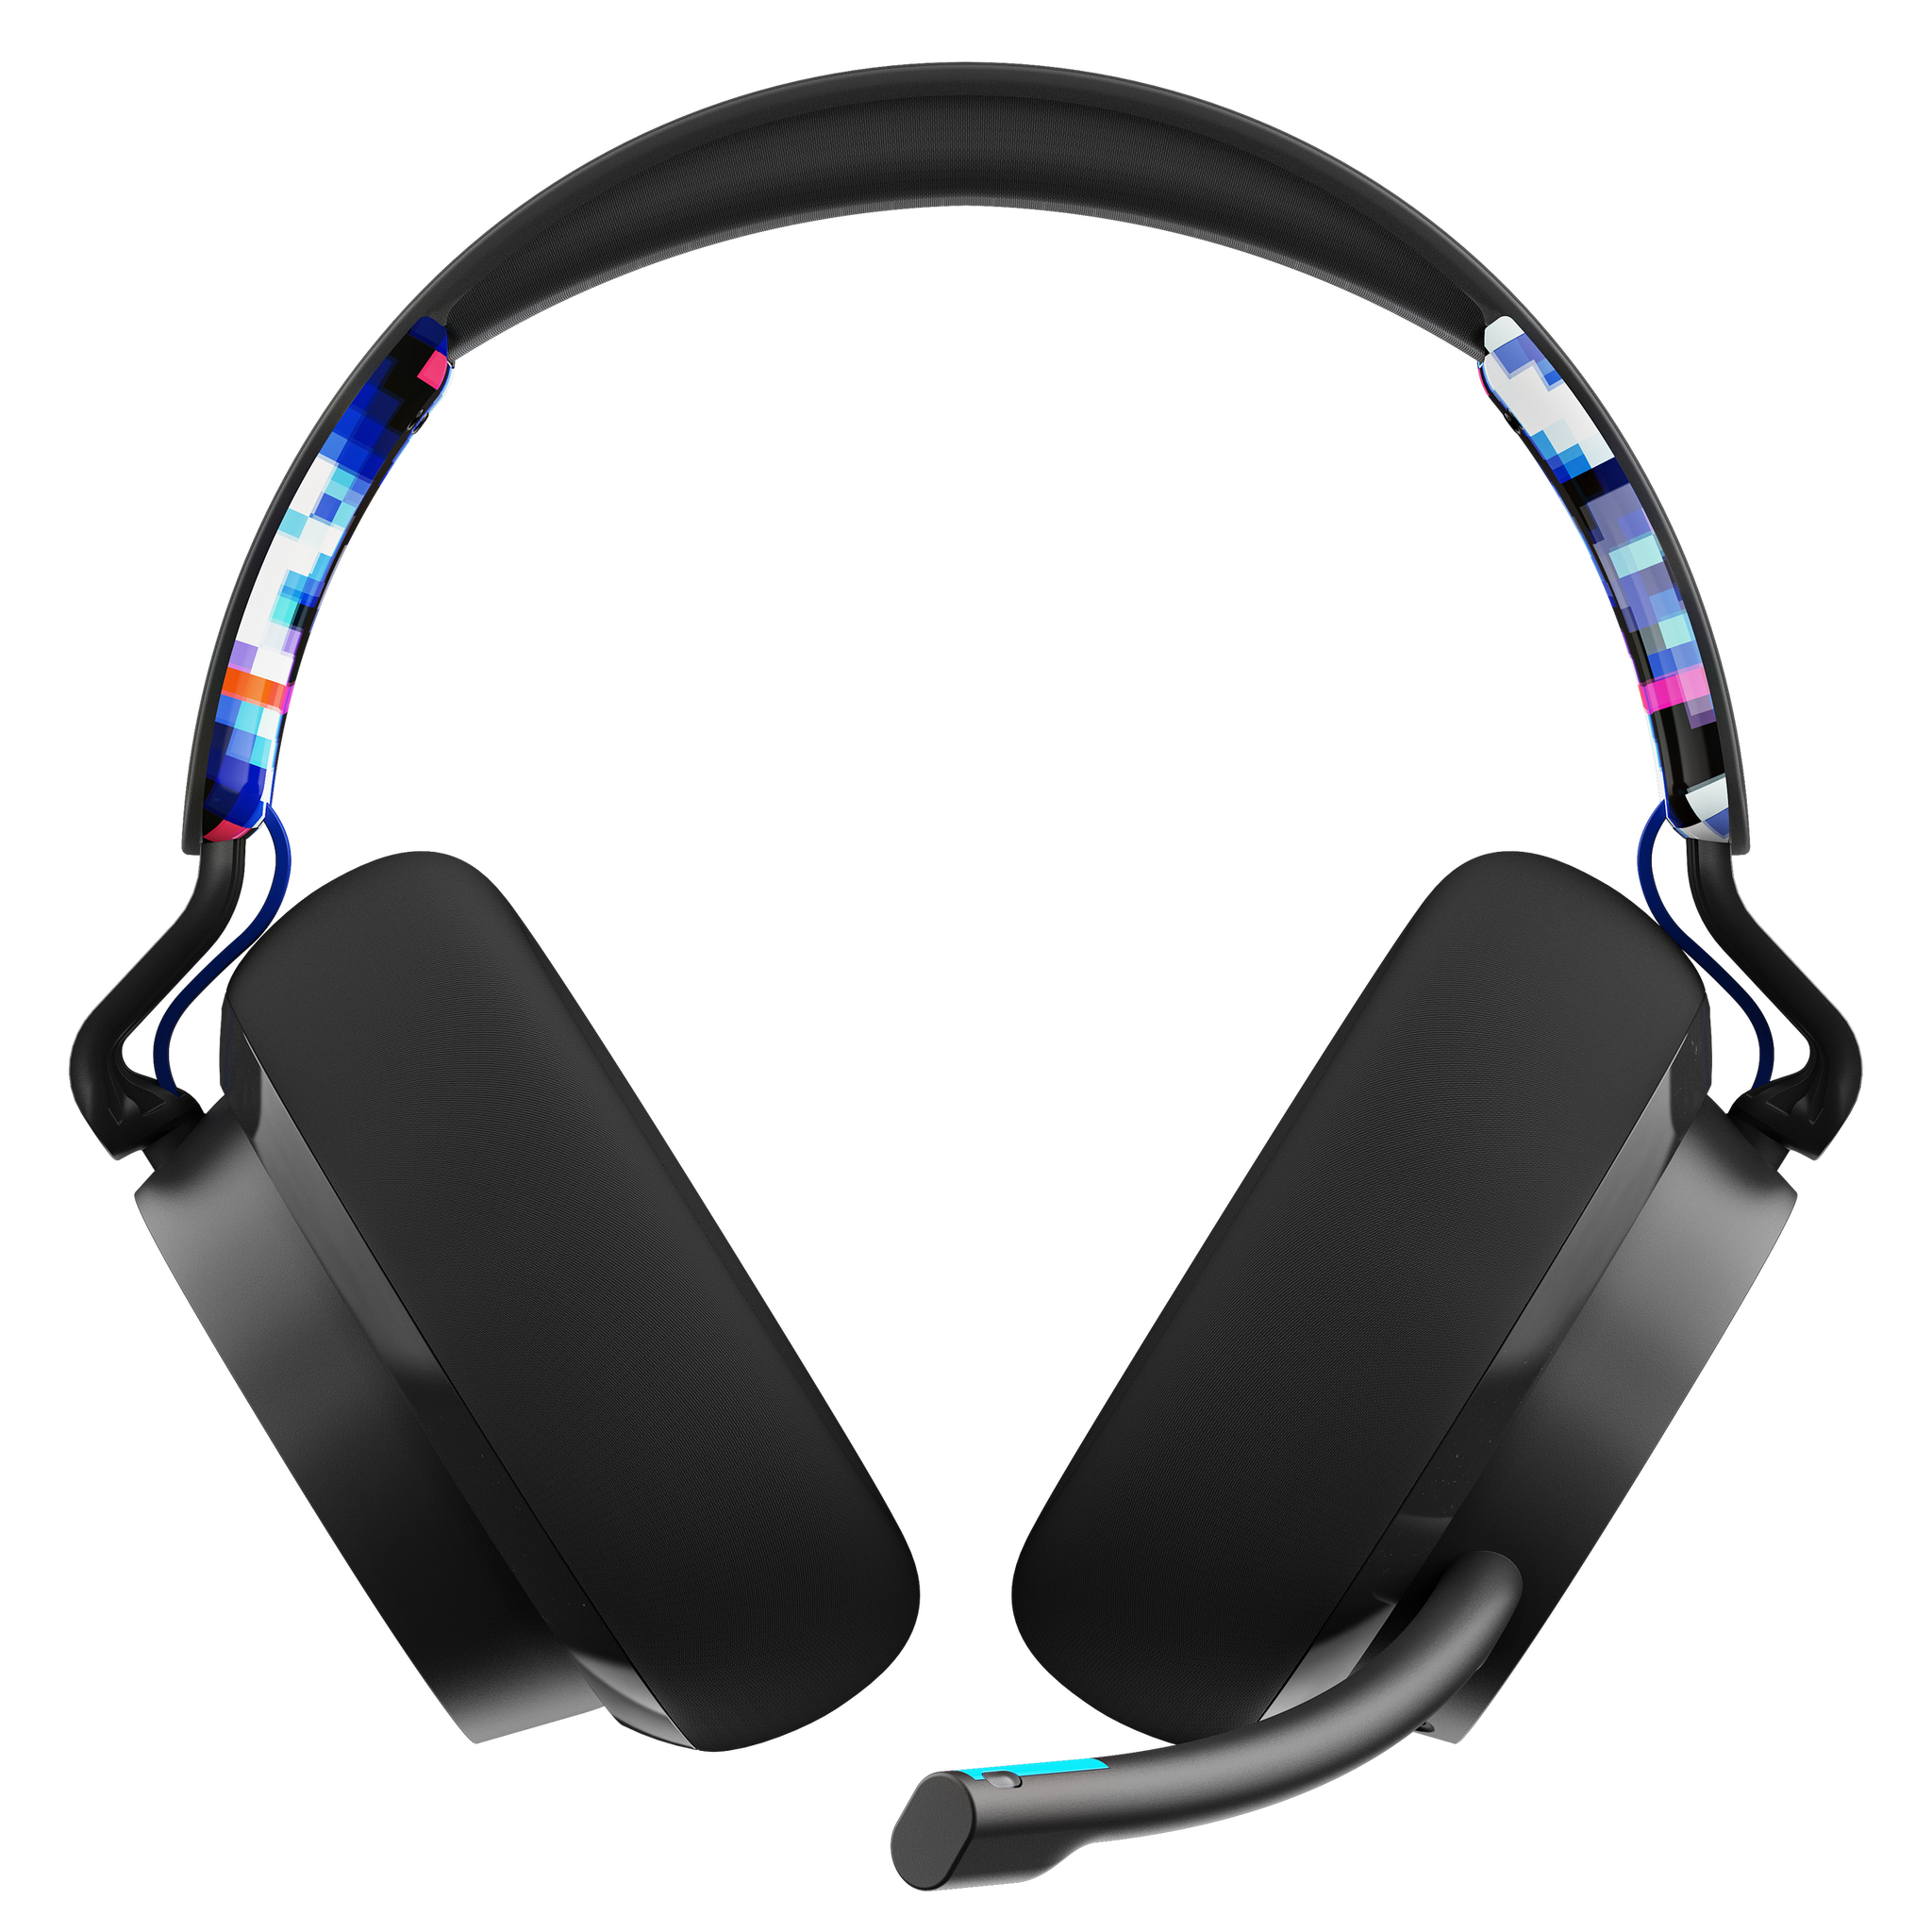 SLYR® Pro Multi-Platform Wired Gaming Headset